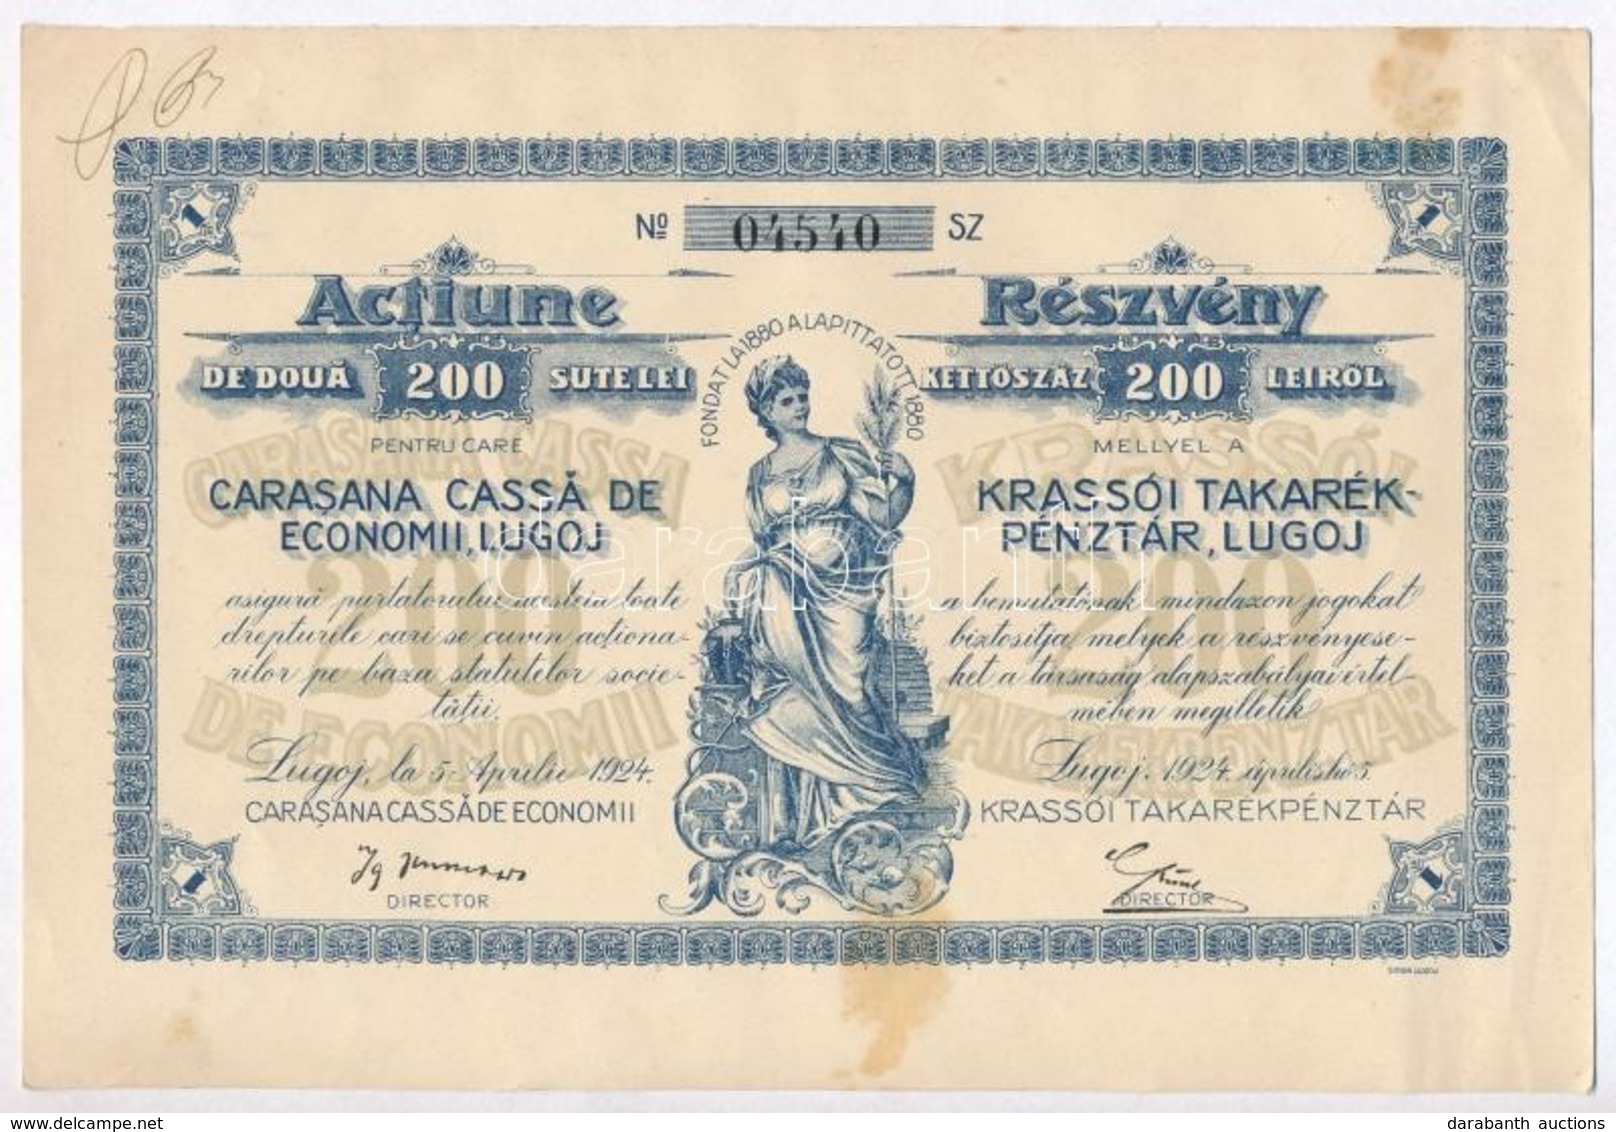 Romania / Lugoj 1924. 'Krassoi Takarekpenztar' Reszvenye 200L-r?l T:II Fo.
Romania / Lugoj 1924. 'Krasso Savings' Share  - Unclassified